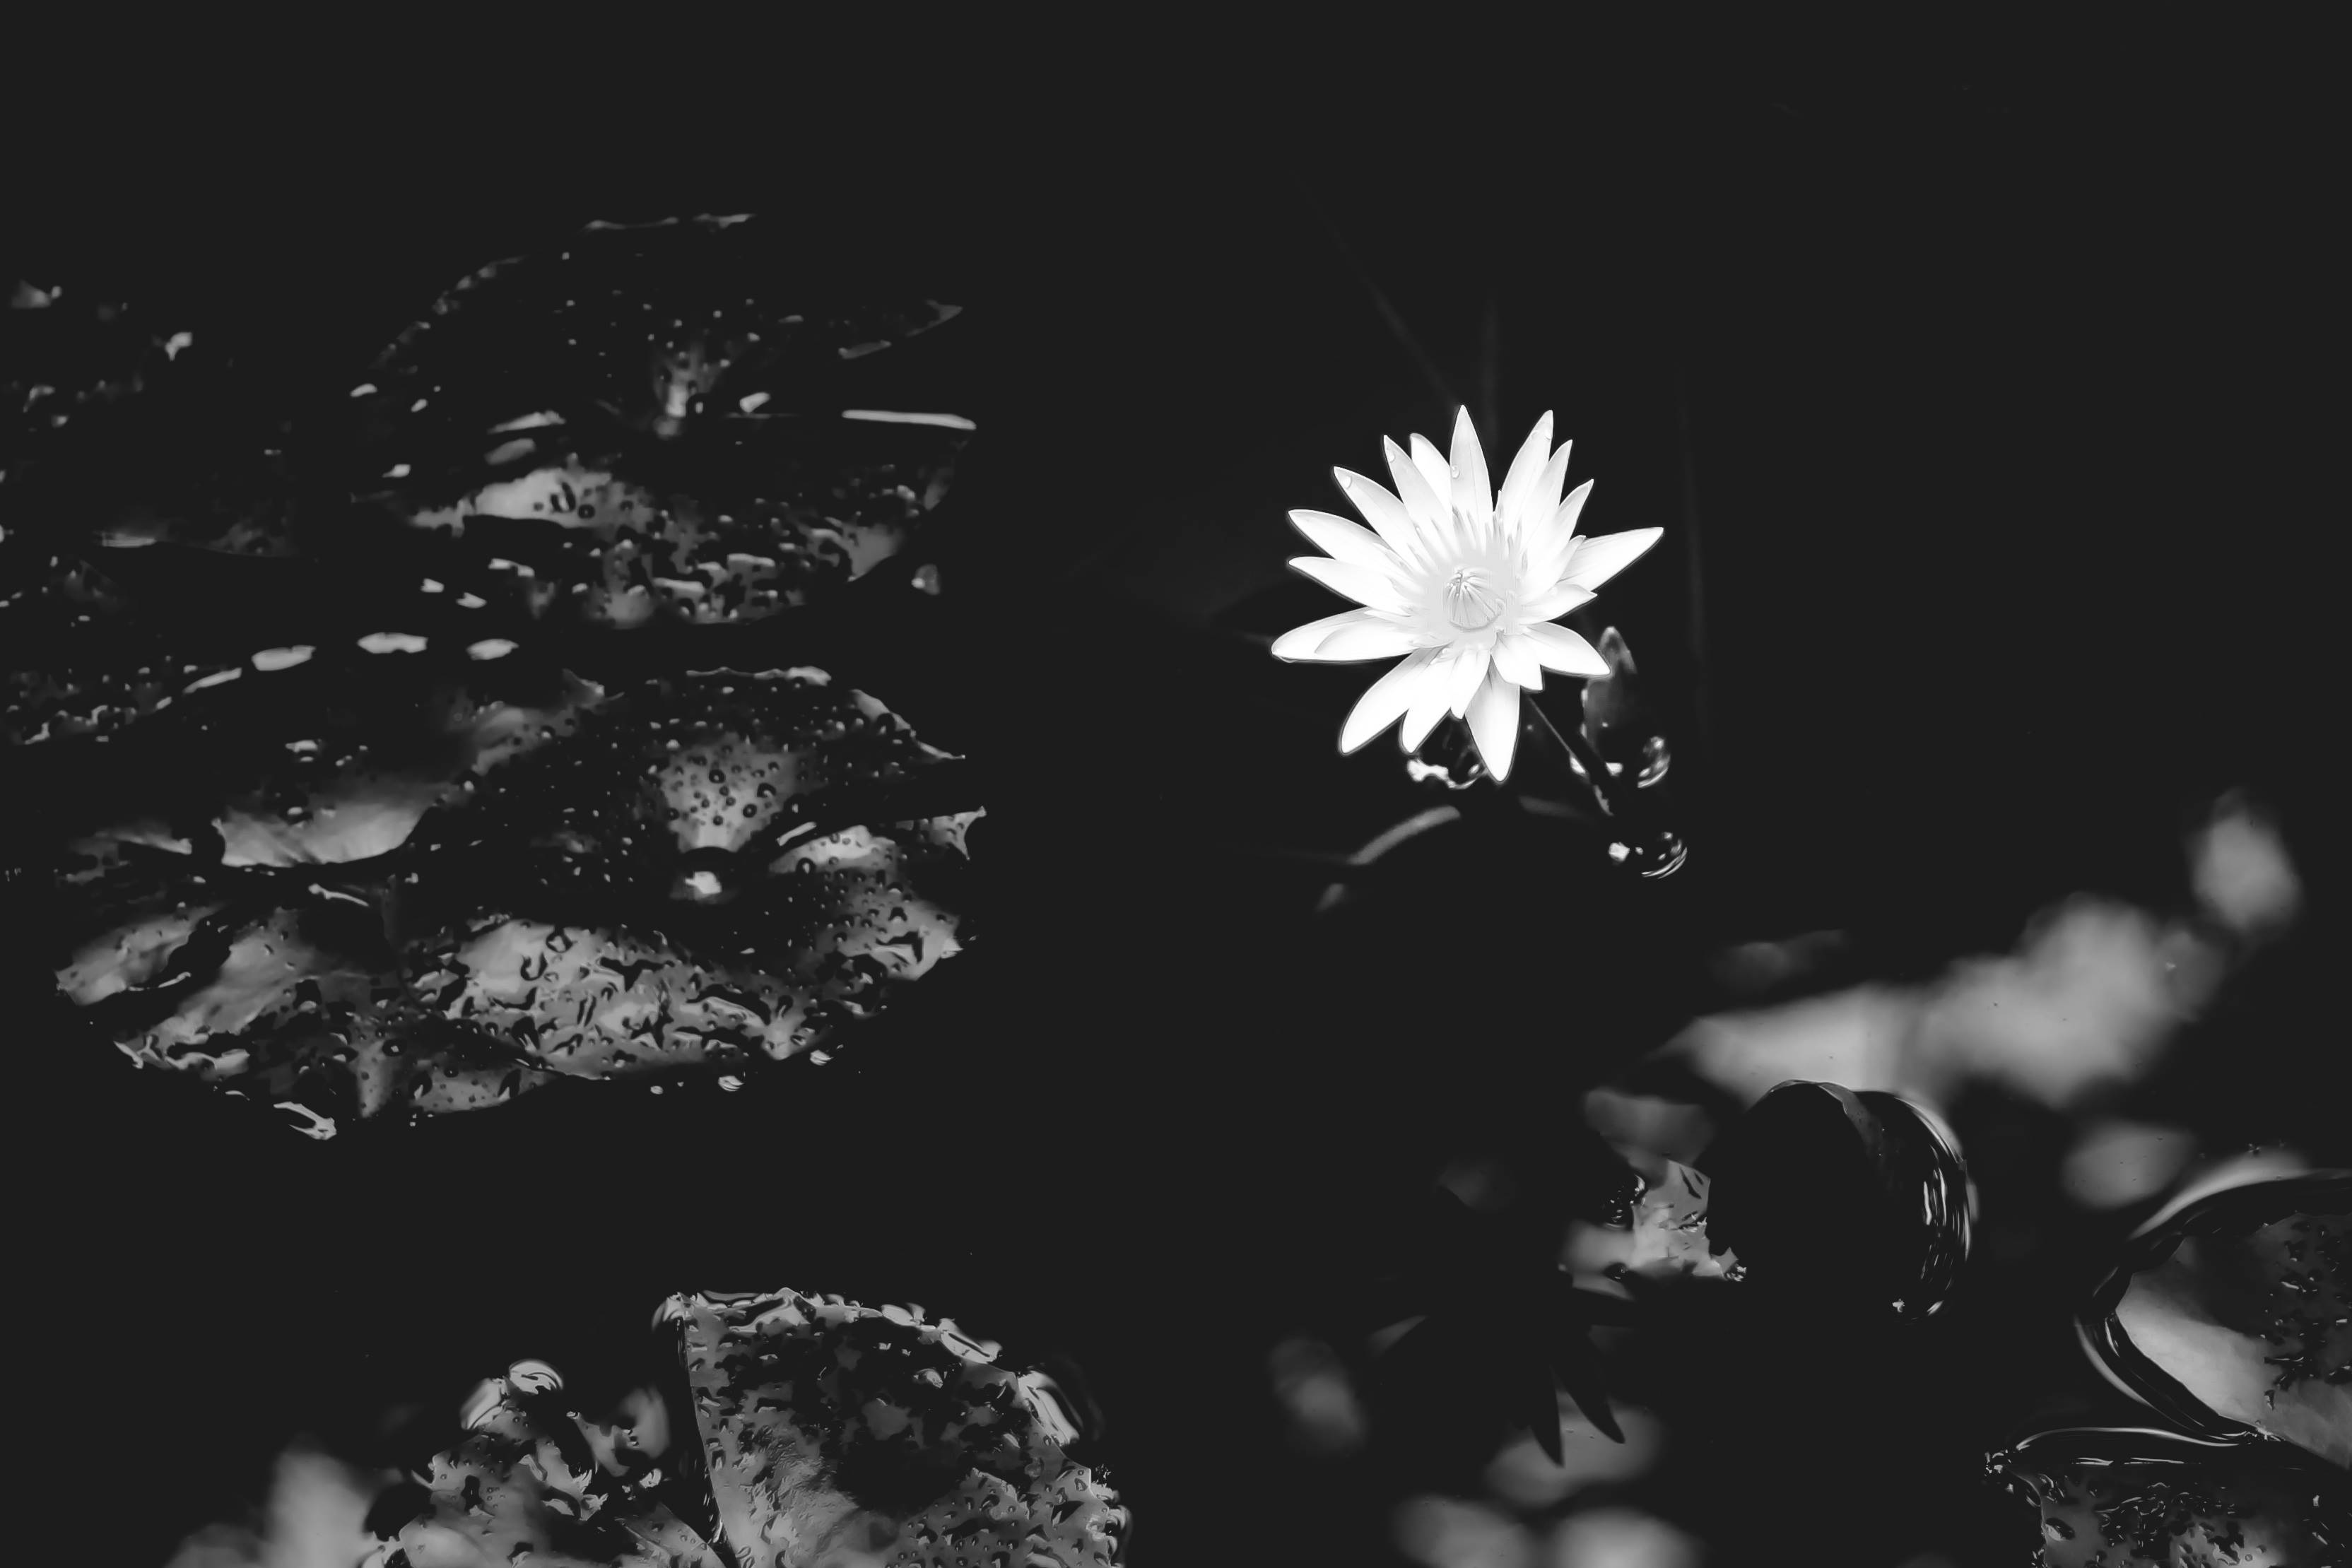 General 3328x2219 black background minimalism monochrome plants leaves flowers water drops dark black